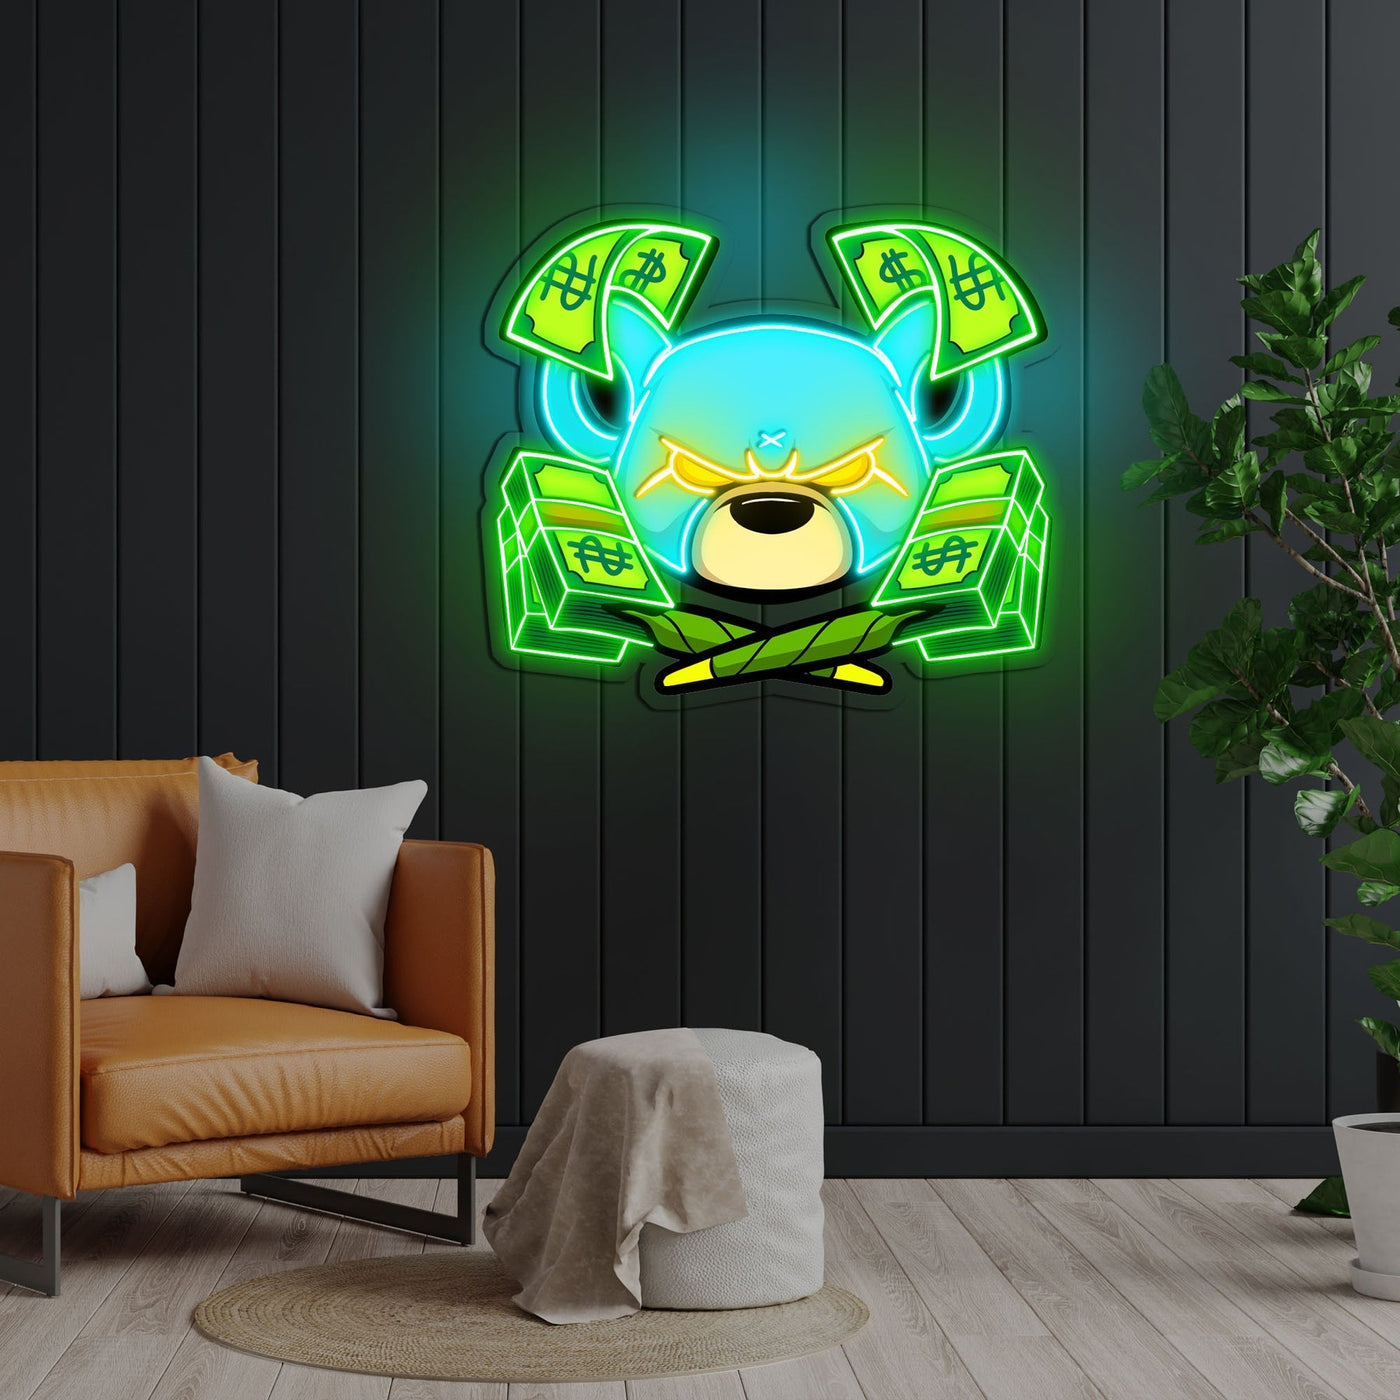 Rich Angry Bear Neon Sign x Acrylic Artwork - 25"x20"LED Neon x Acrylic Print